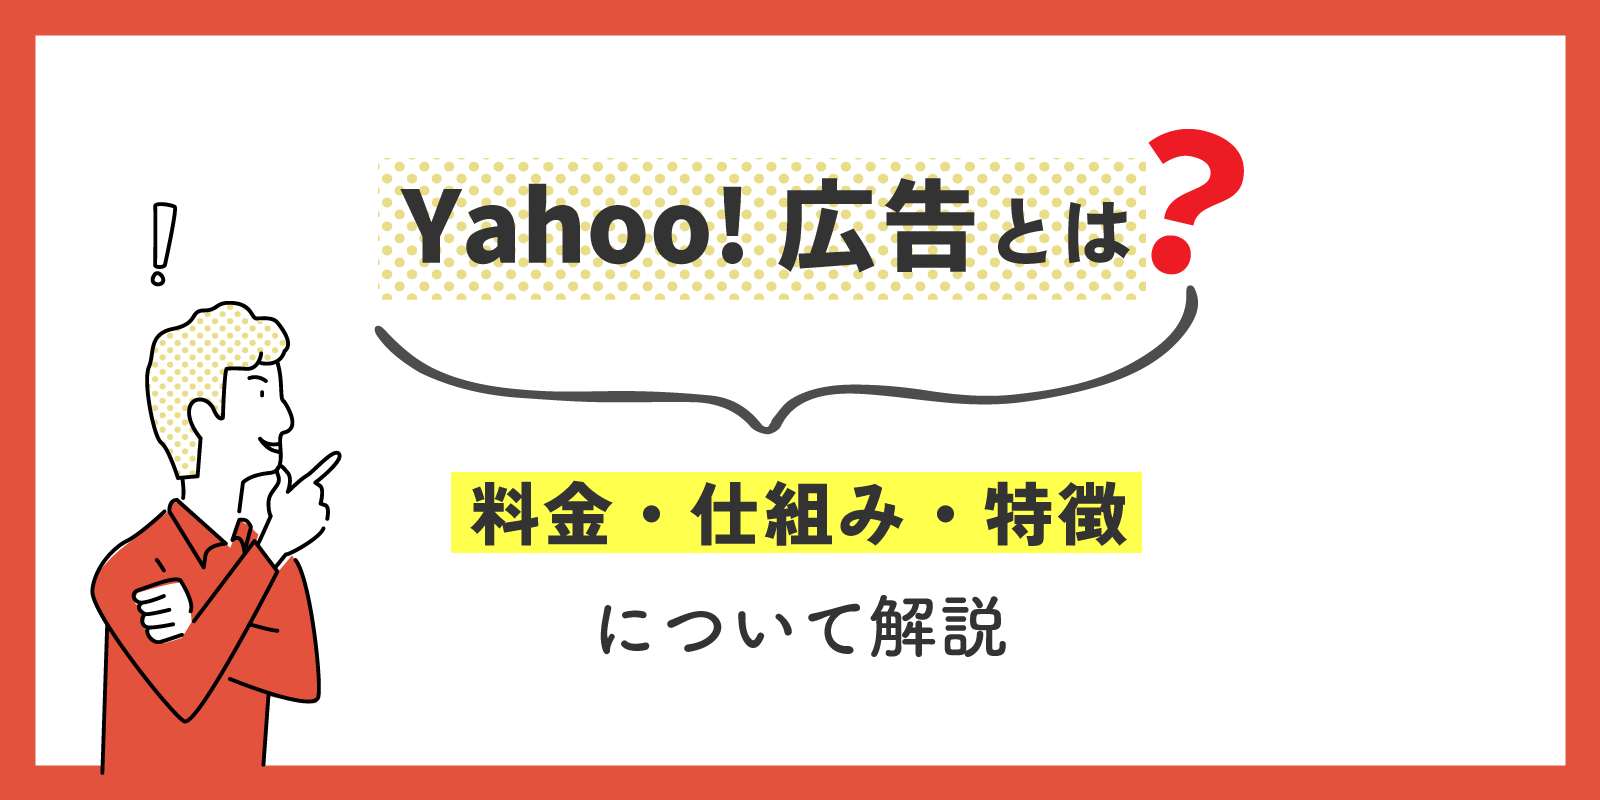 Yahoo!広告とは？料金・仕組み・特徴について解説